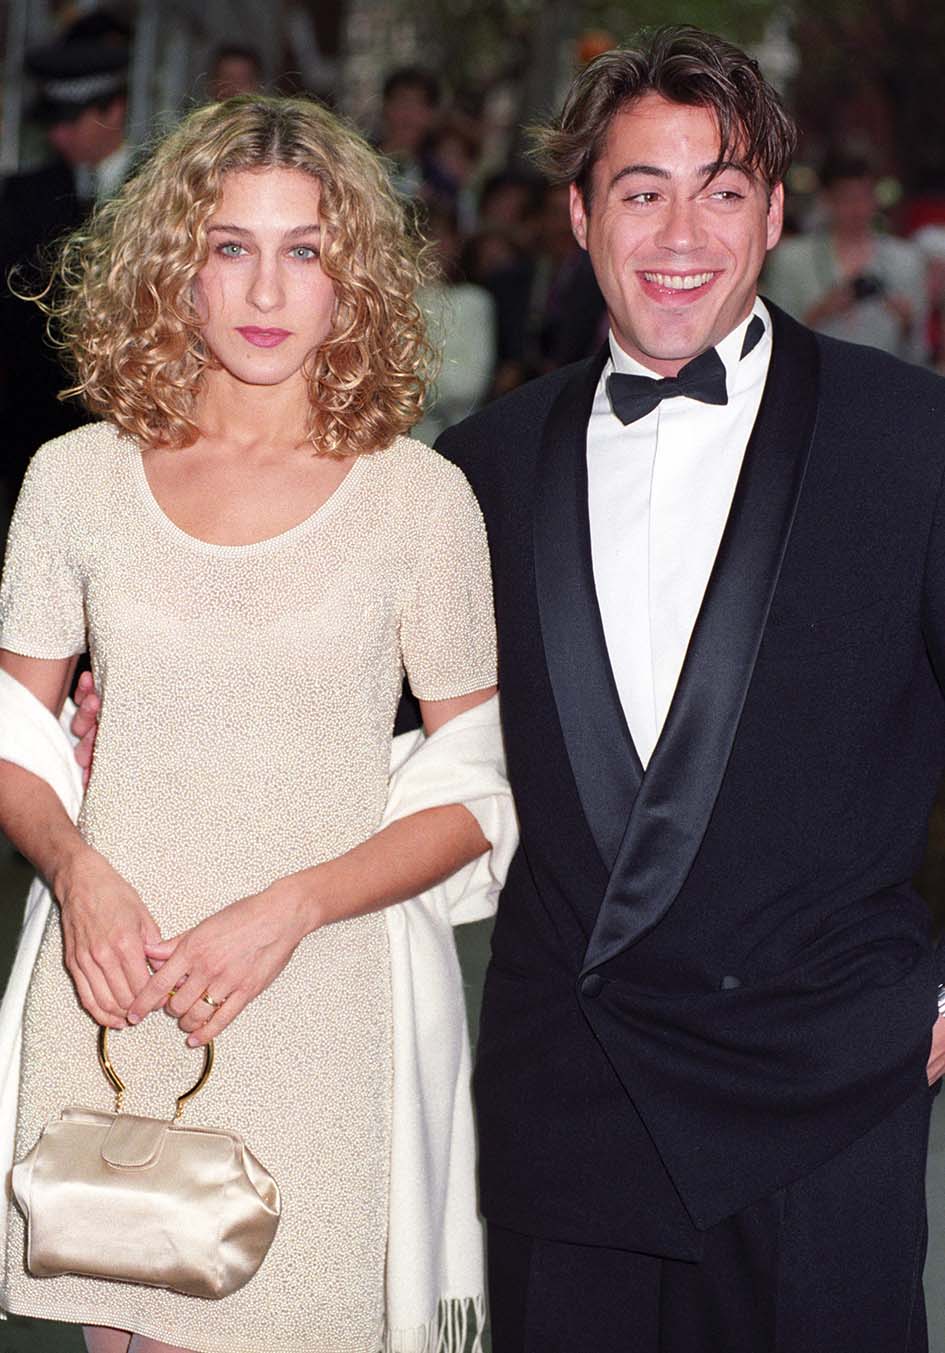 O Robert Downey Jr. και η Sarah Jessica Parker στην πρεμιέρα στο Λονδίνο της ταινίας "L.A. Story" το 1991.